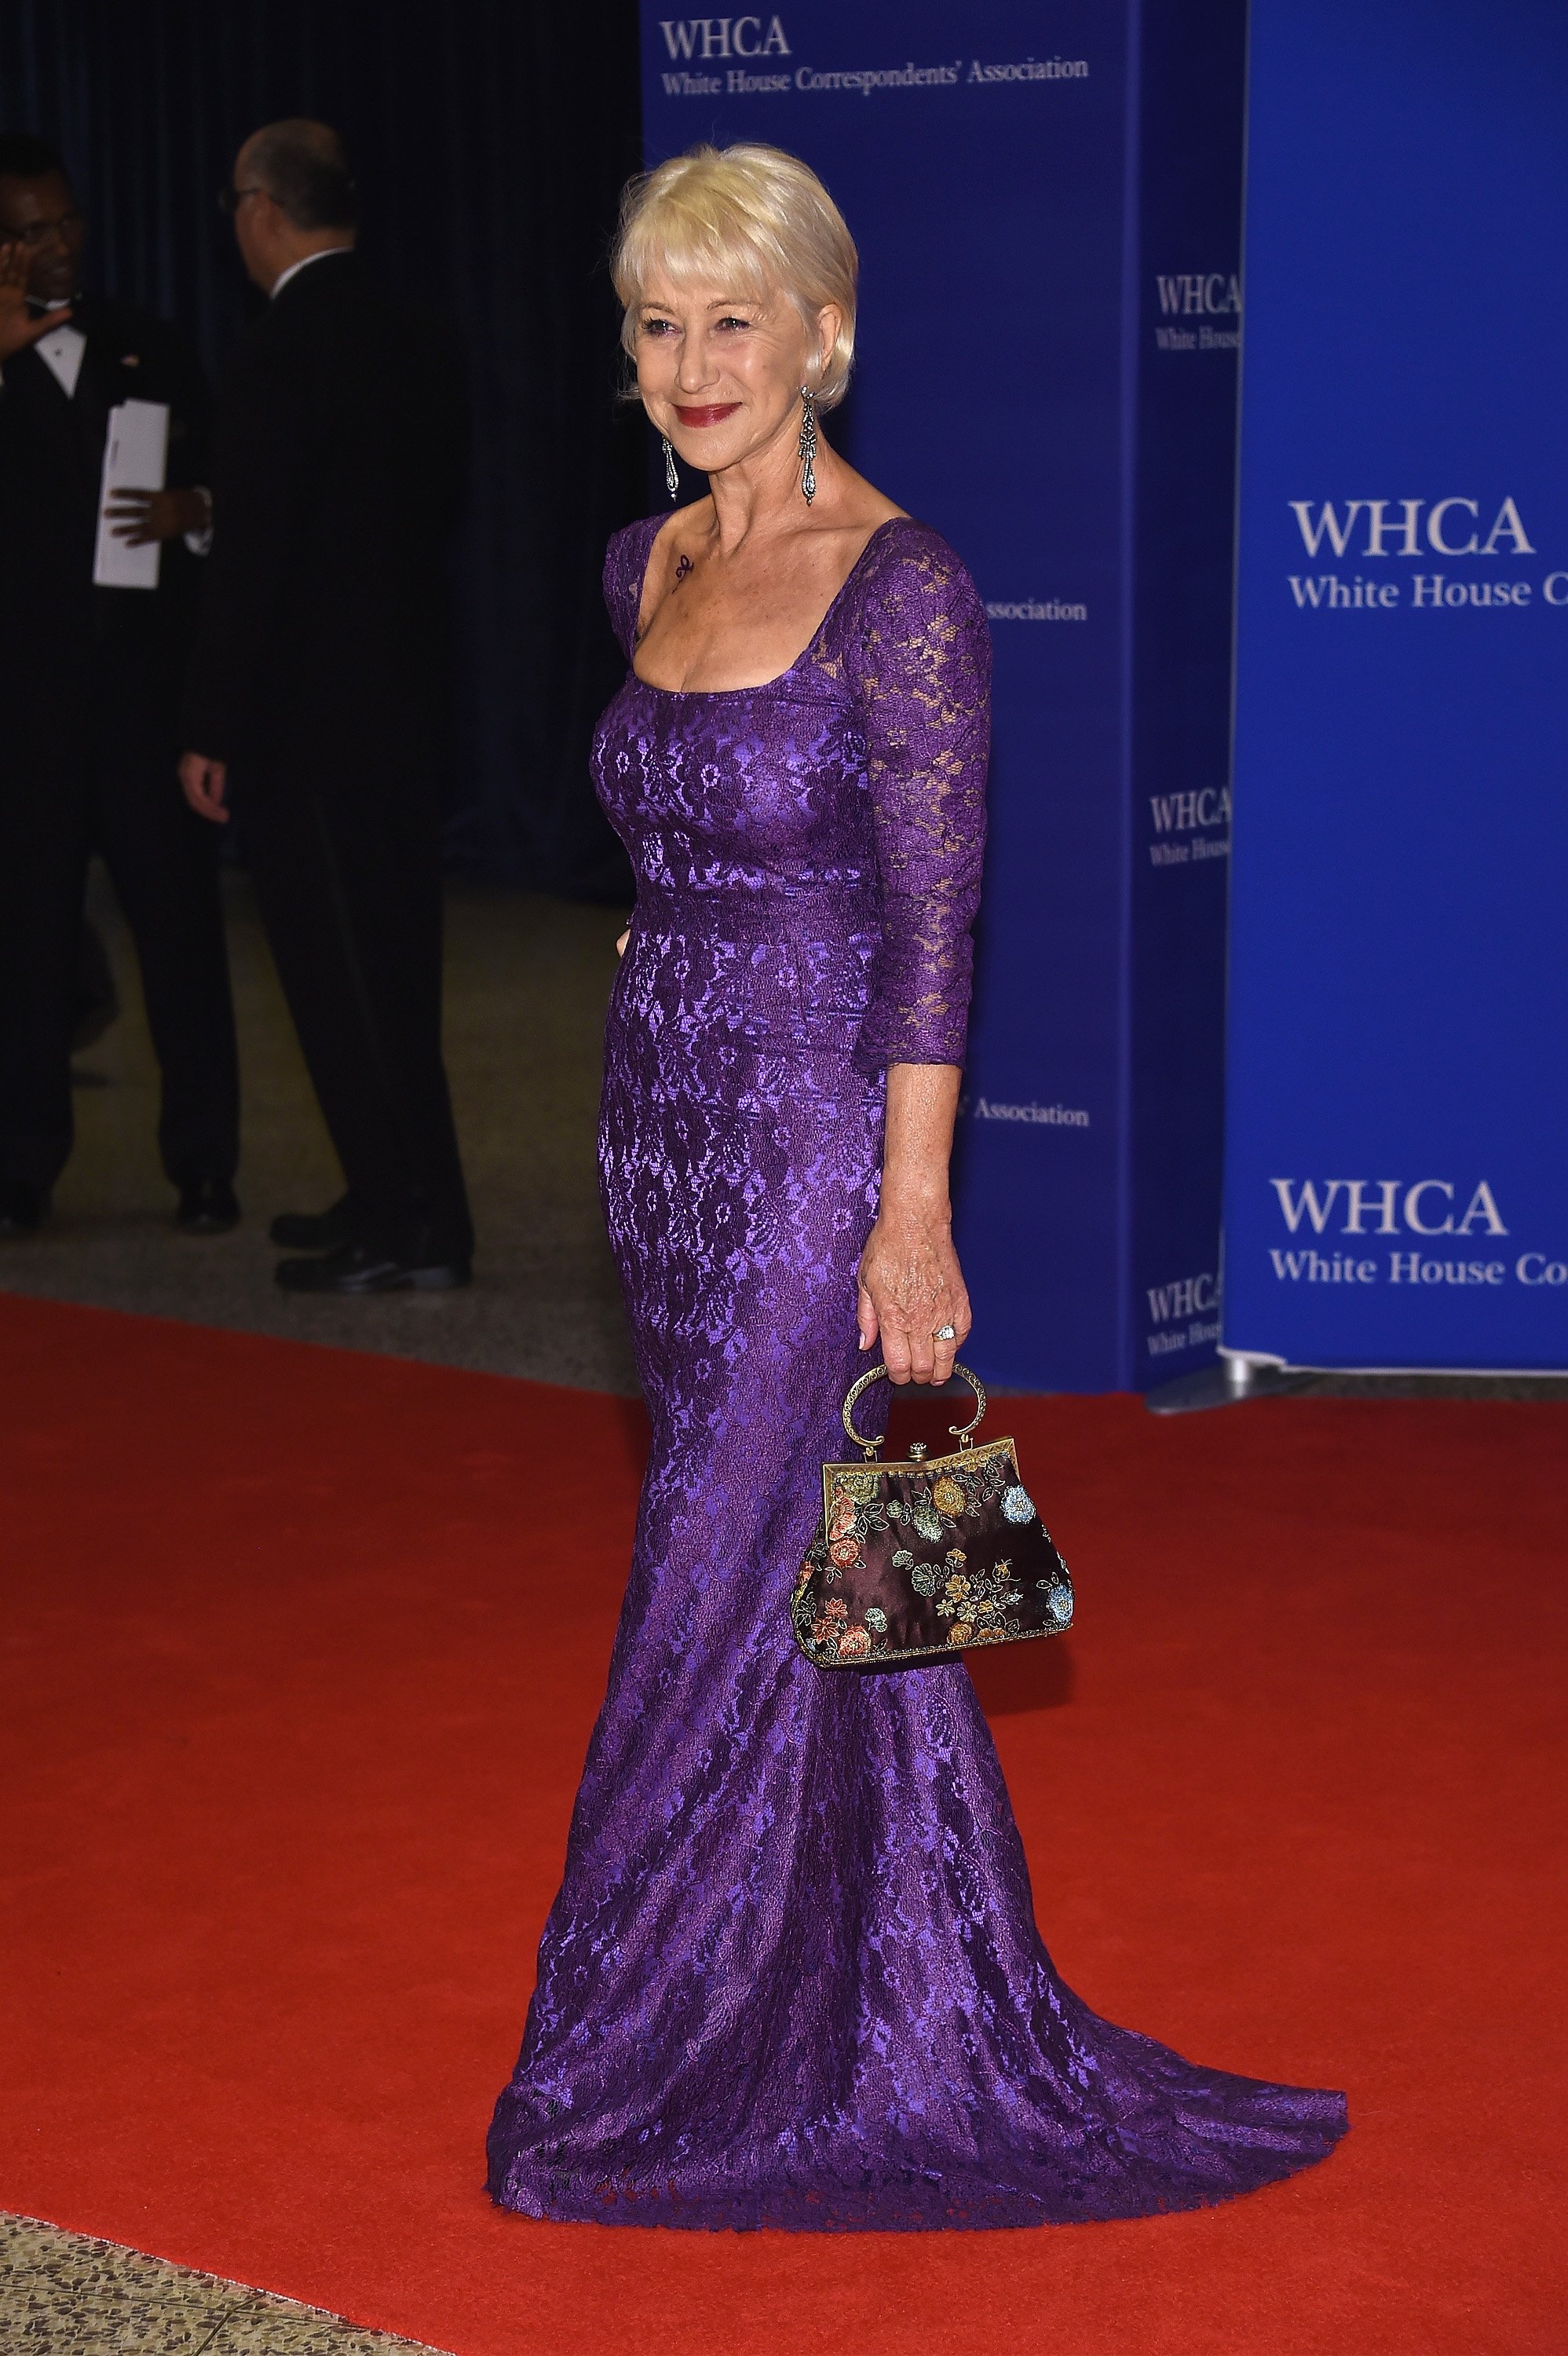 Helen Mirren Actor attends the White House Correspondents' Association Dinner at the Washington Hilton Hotel in Washington on April 30, 2016.